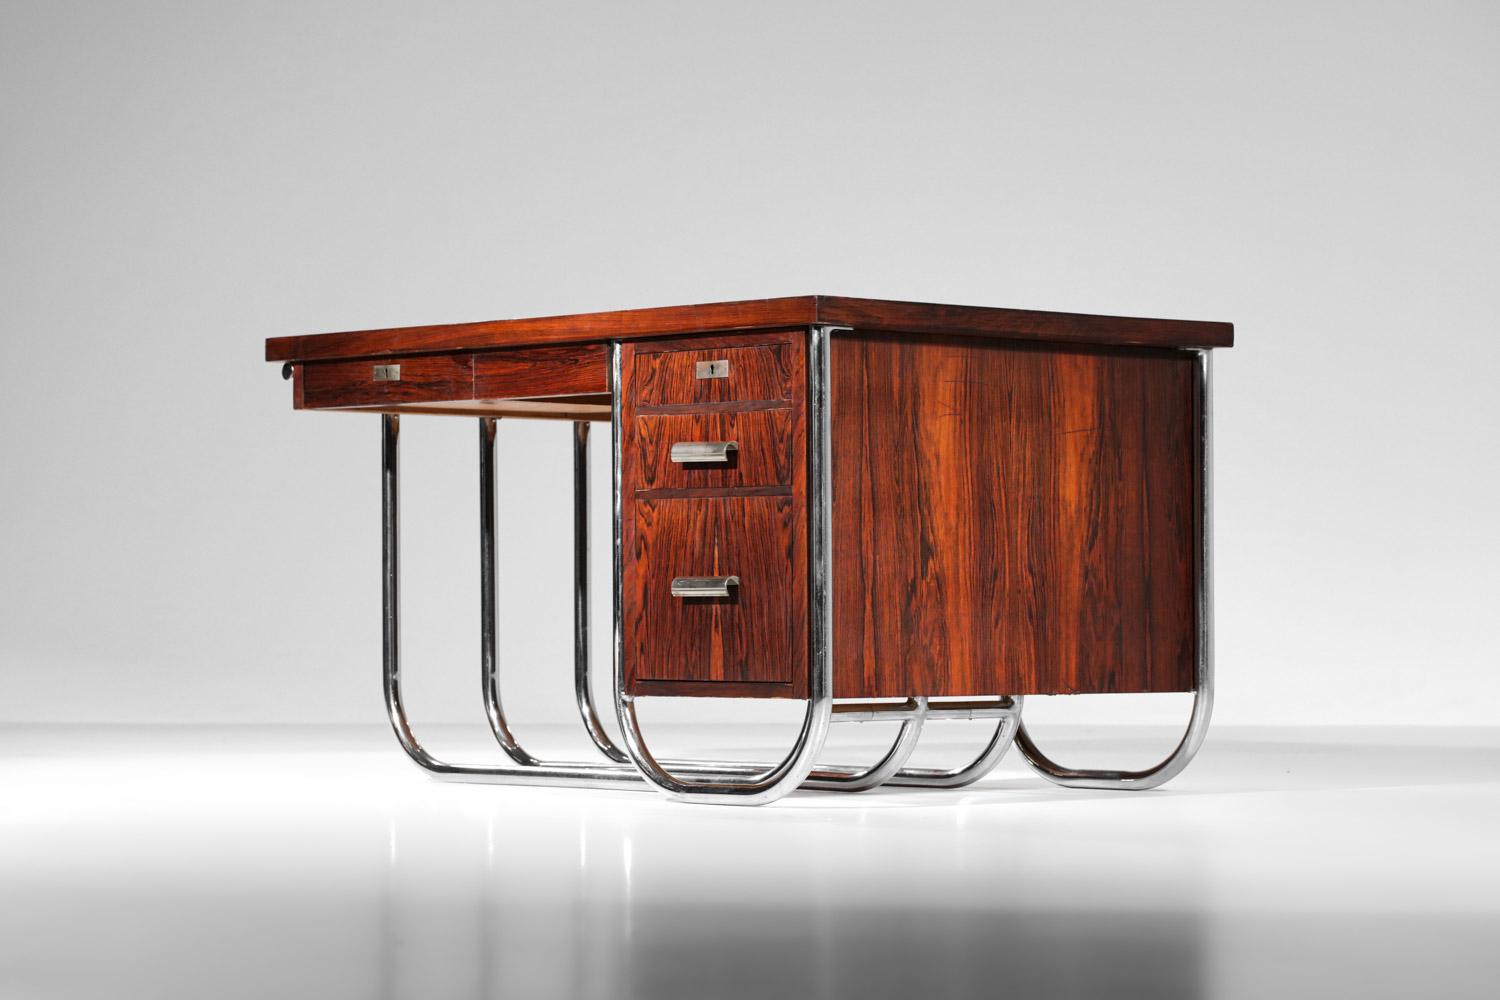 Modernist Desk in Solid Wood 40s / 50s Bauhaus Style Vintage For Sale 4